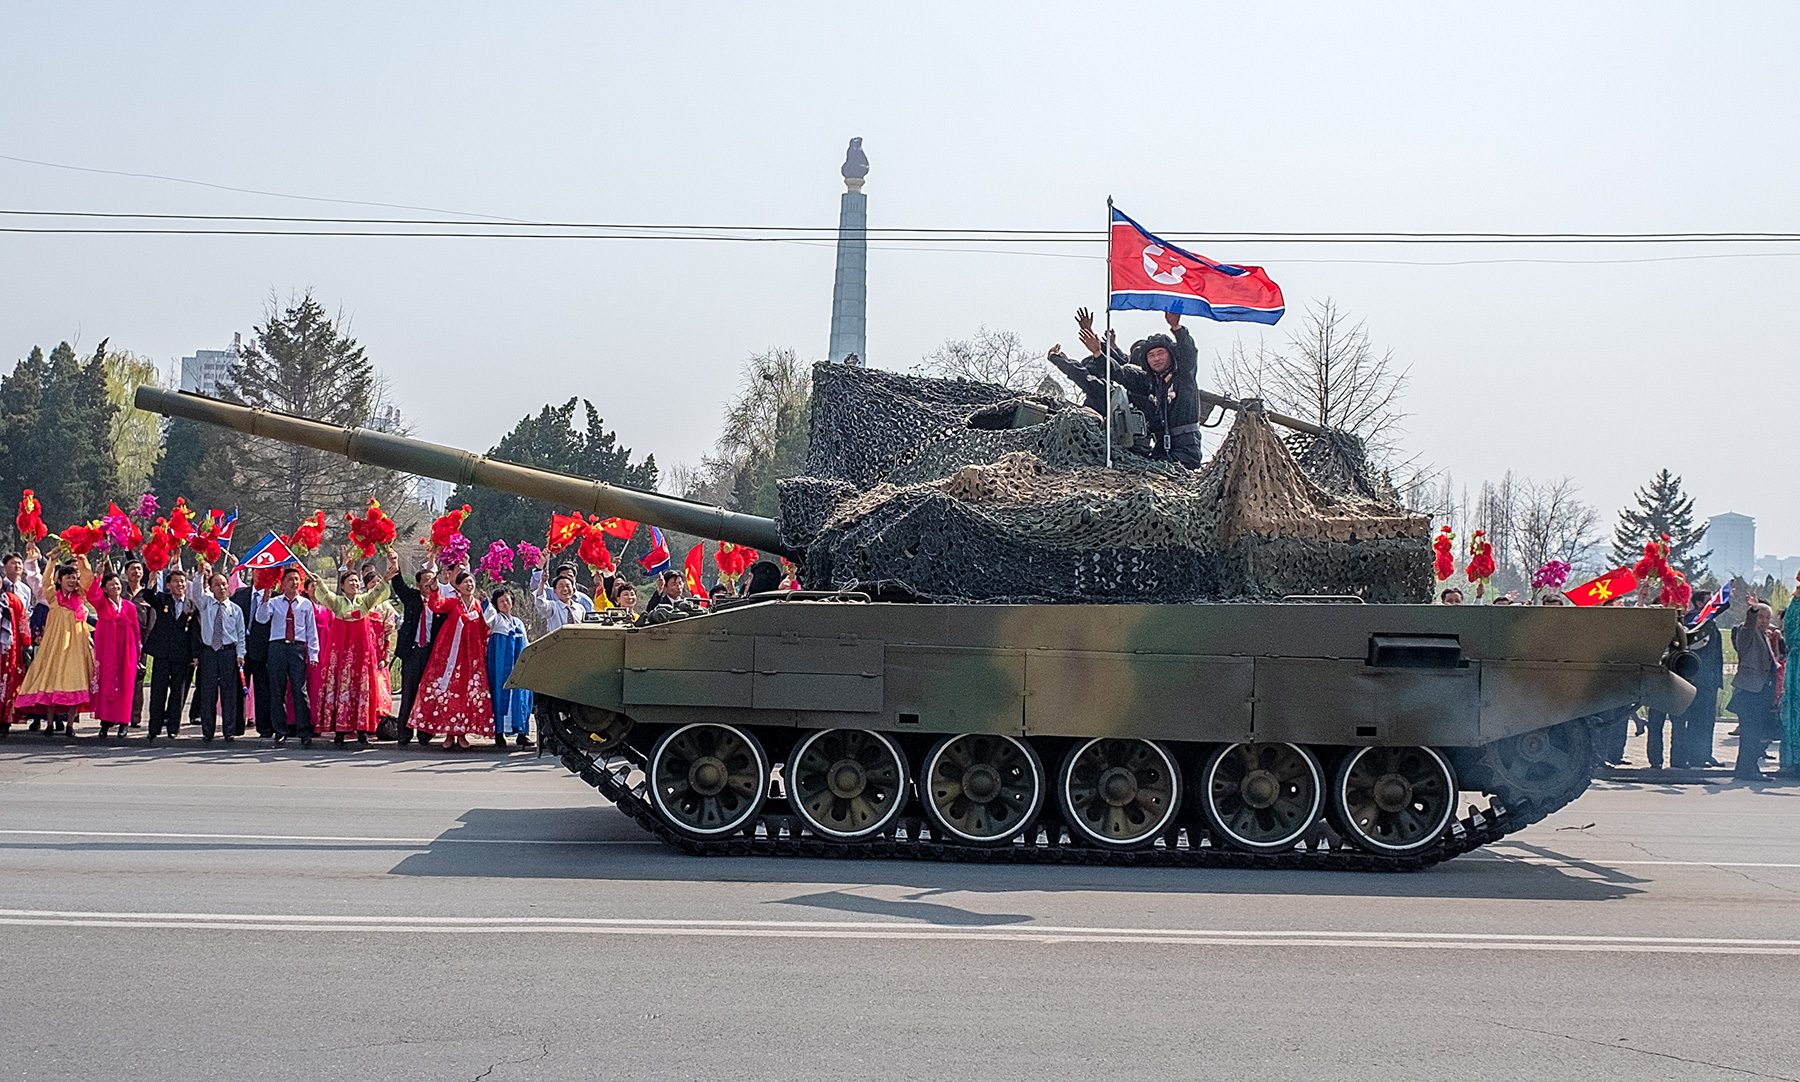 Vorbeifahrender Panzer mit winkenden Soldaten in Pjöngjang, Nordkorea